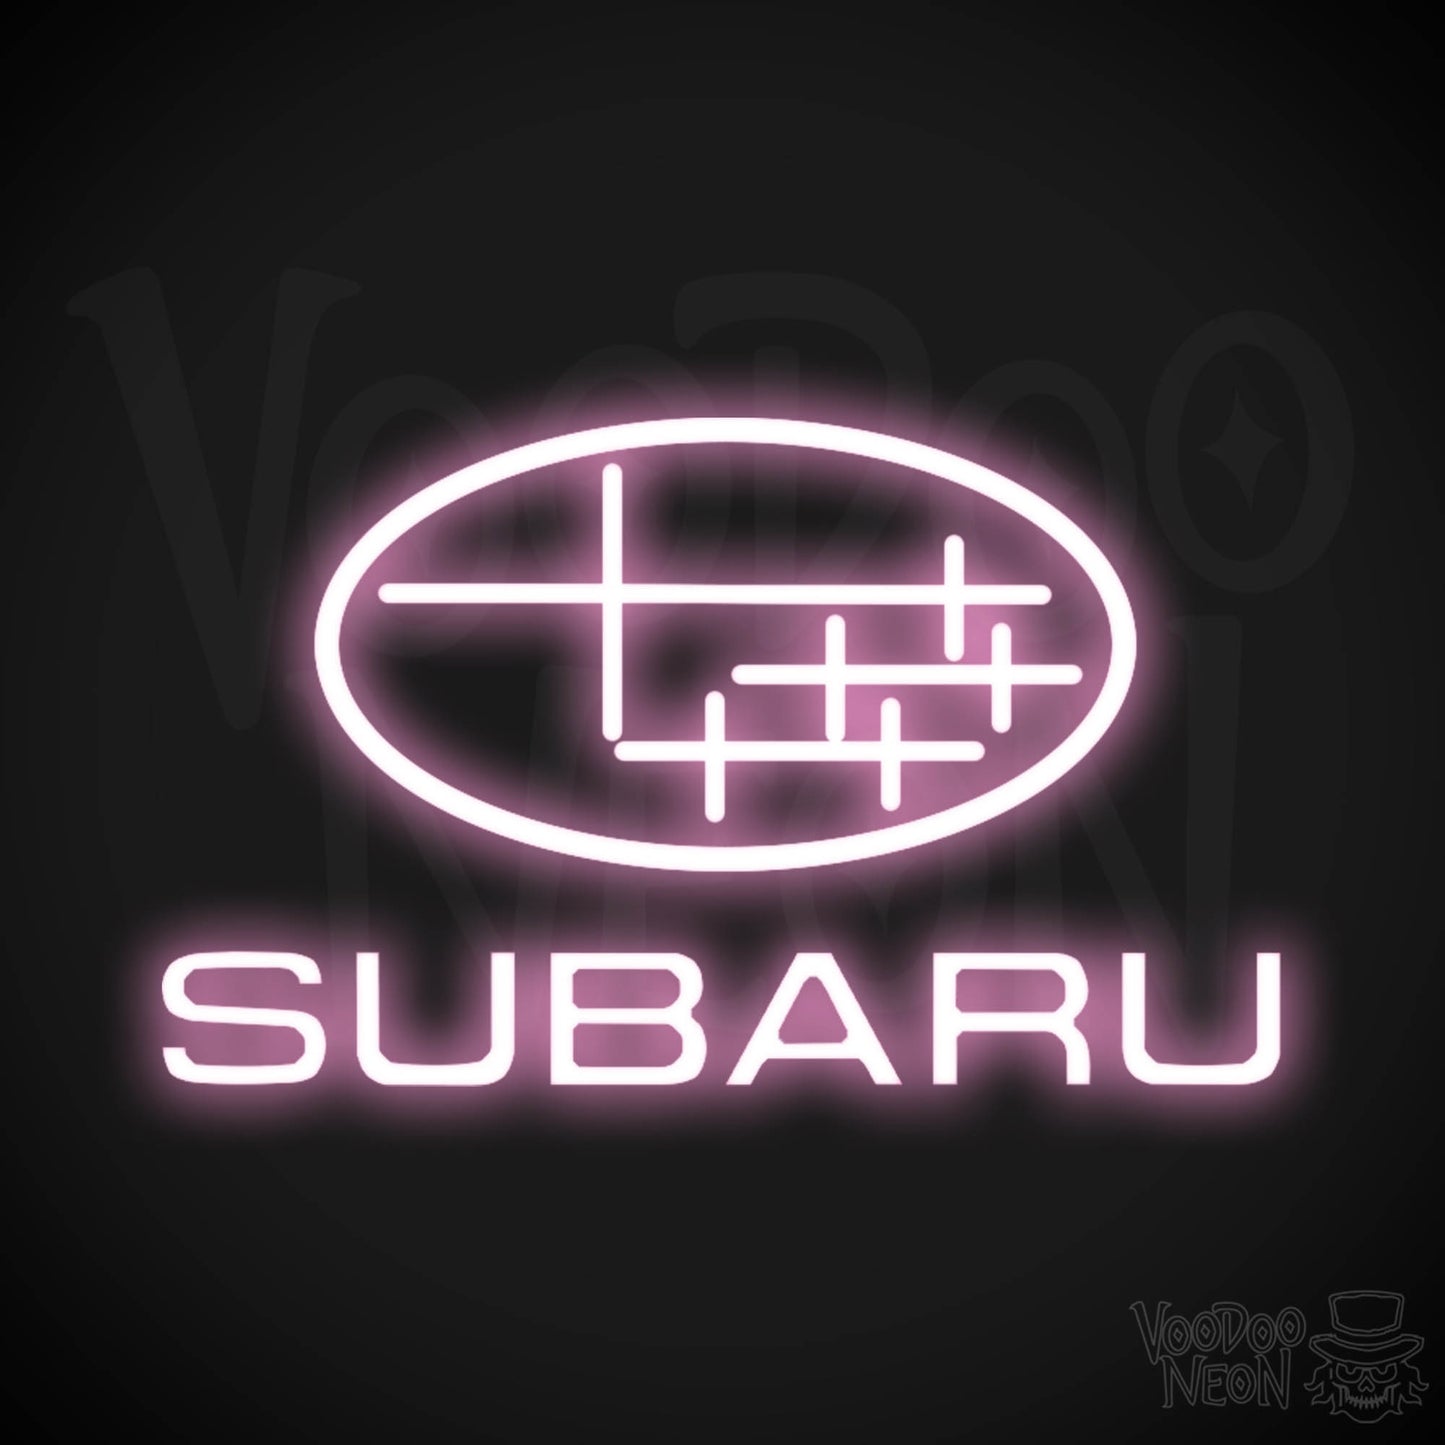 Subaru Neon Sign - Subaru Sign - Subaru Decor - Wall Art - Color Light Pink